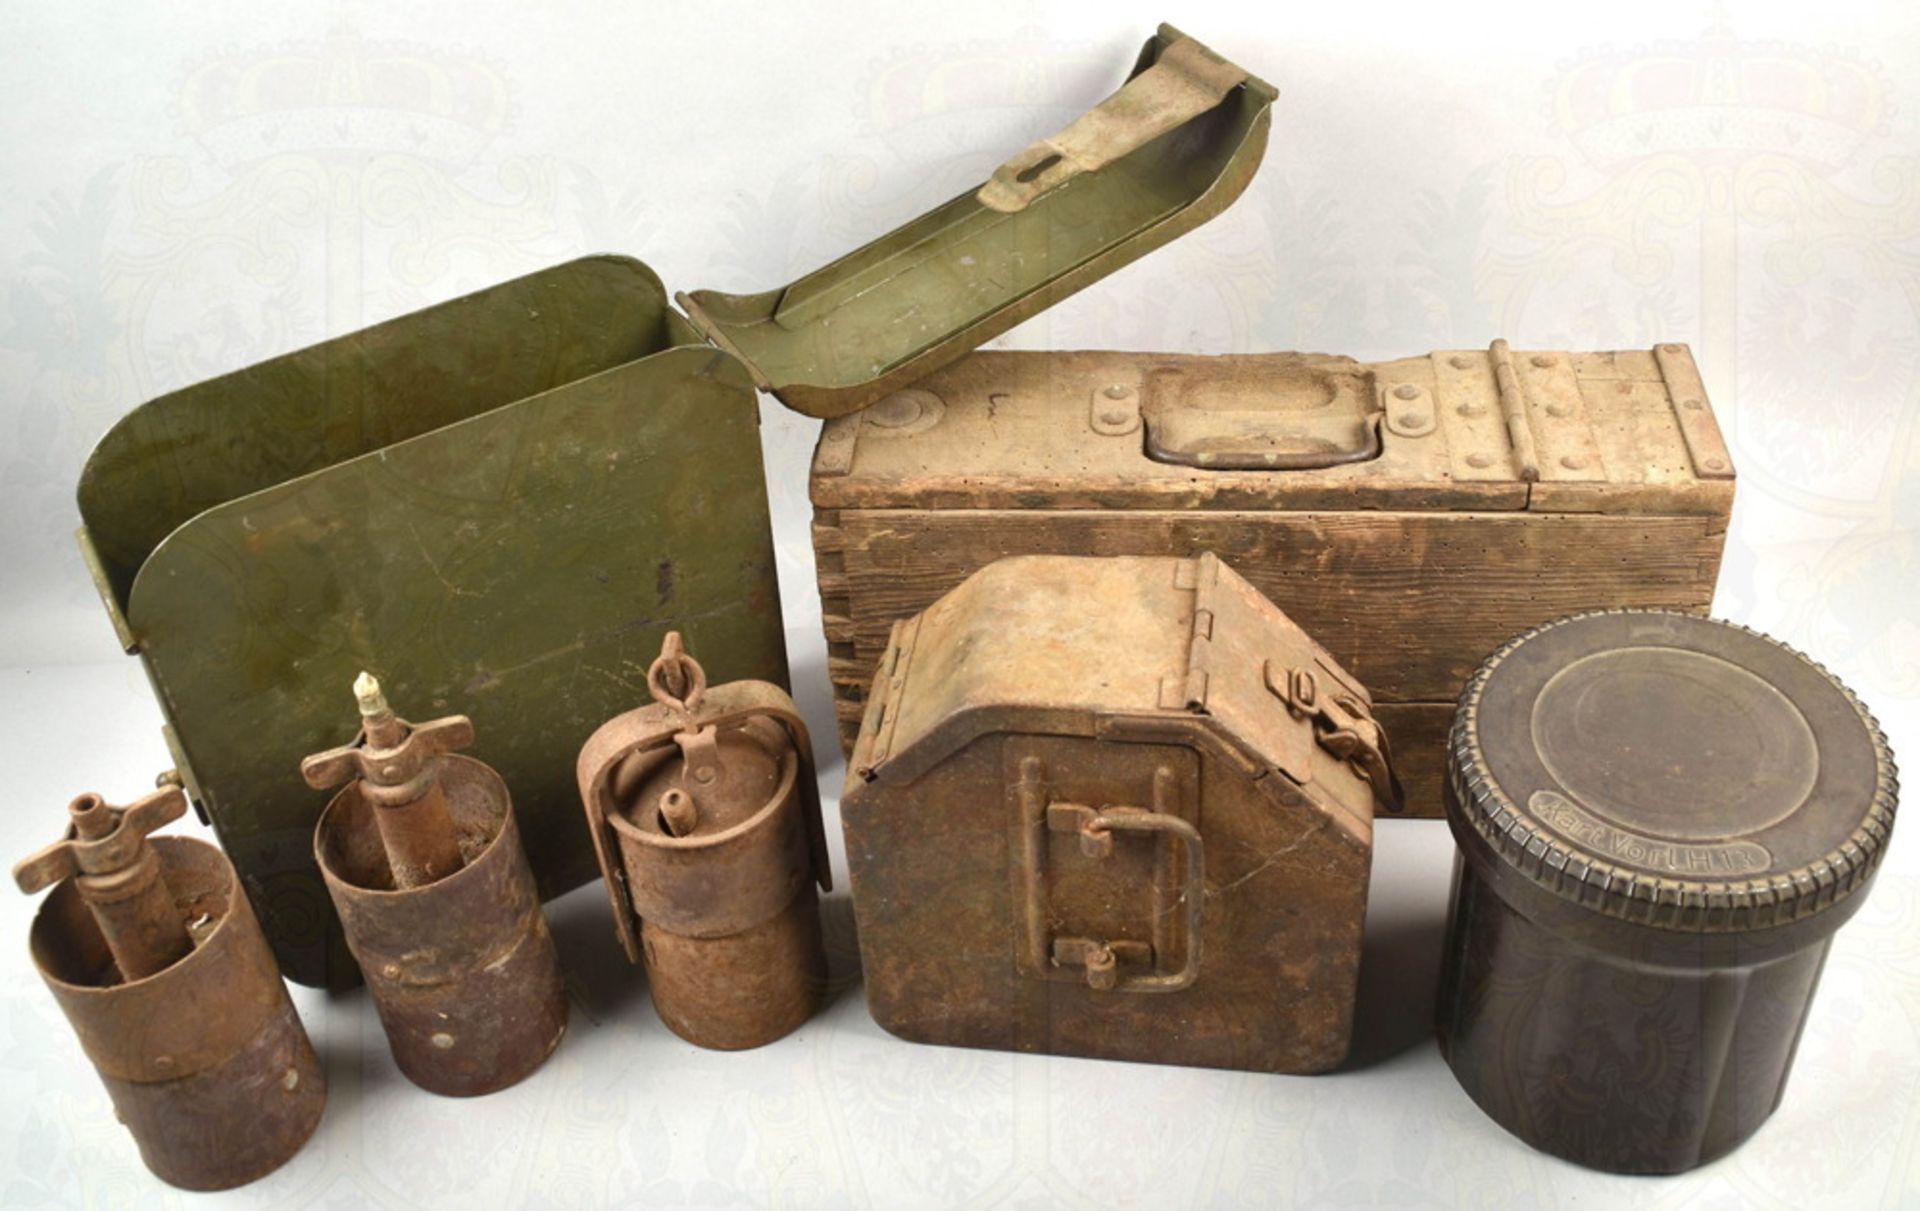 3 ammunition boxes and 1 Wehrmacht bakelite box